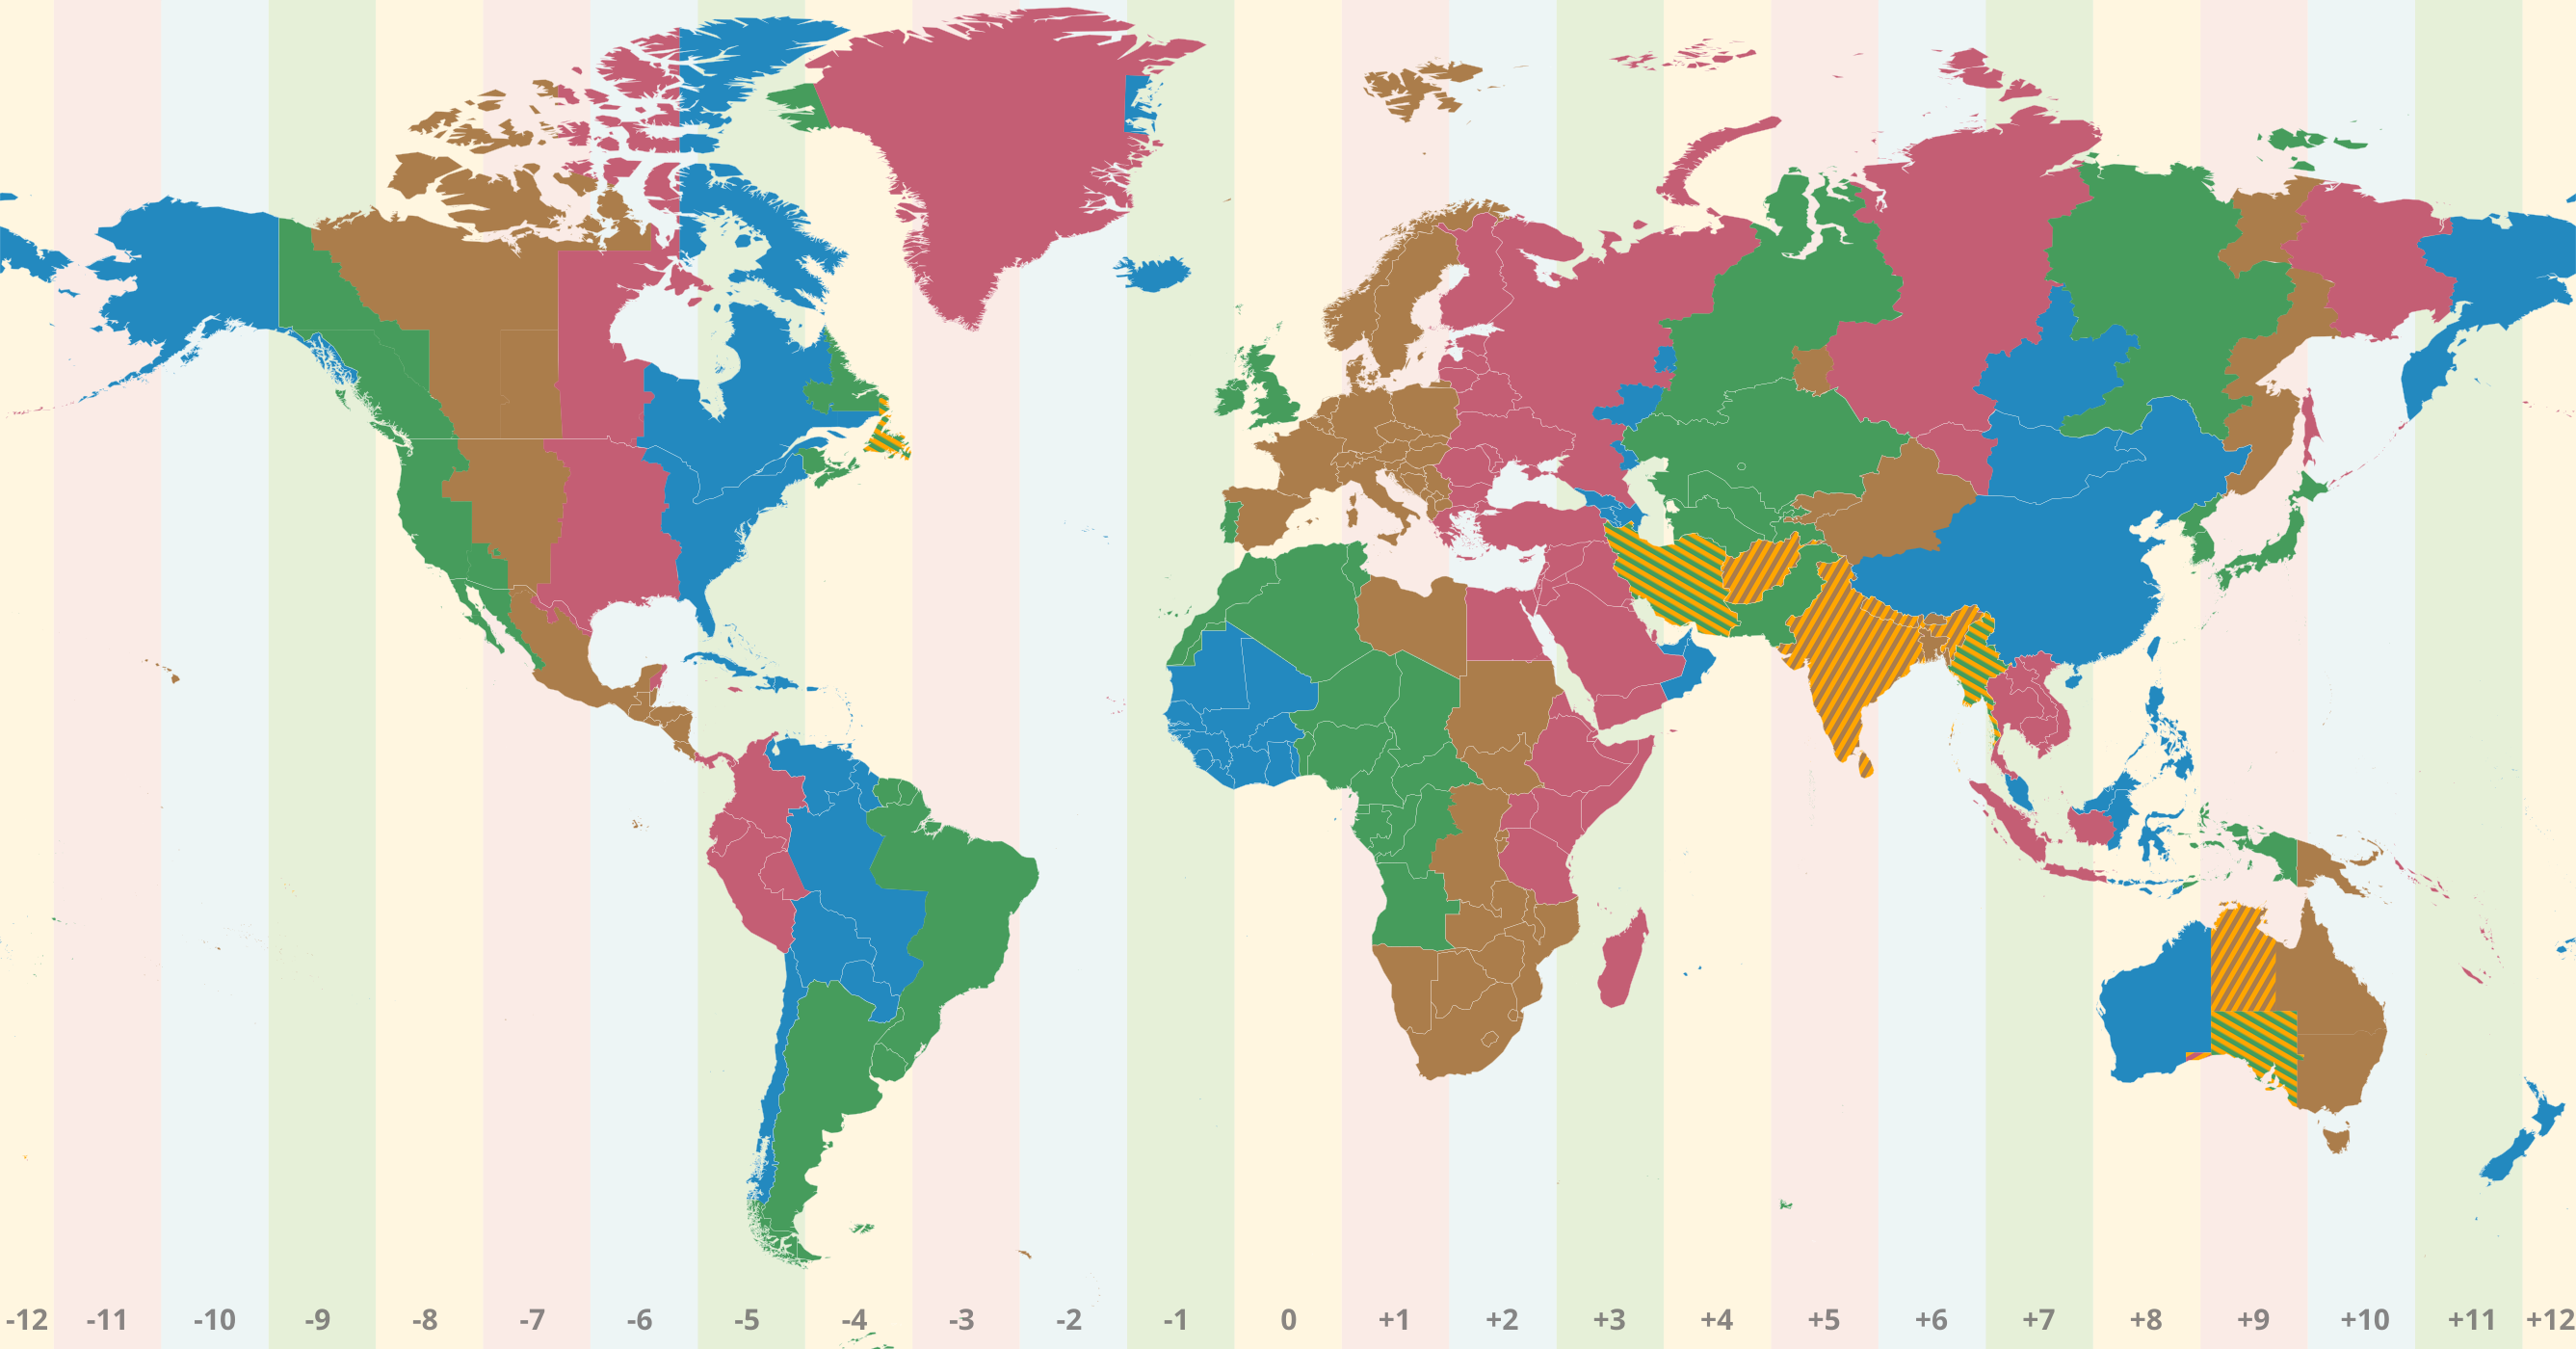 Mapa del mundo con la zona horaria UTC-2:30 resaltada